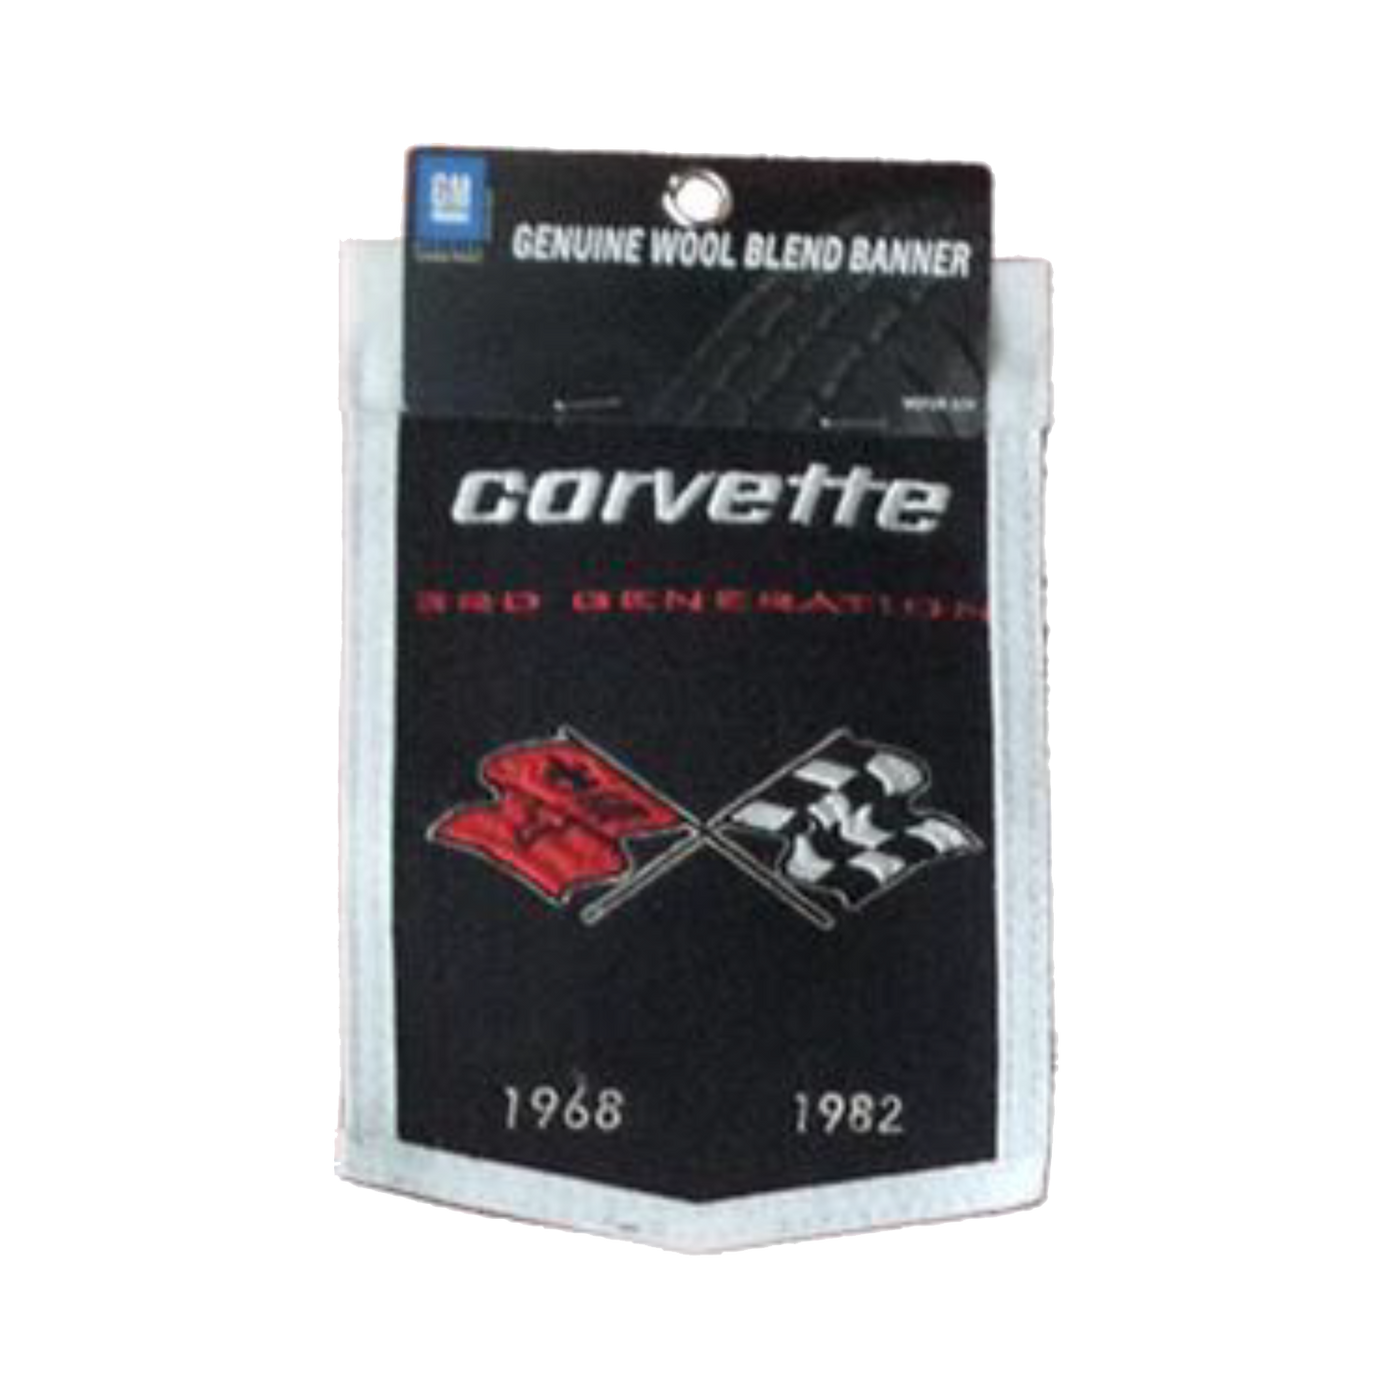 Corvette C3 Mini Banner